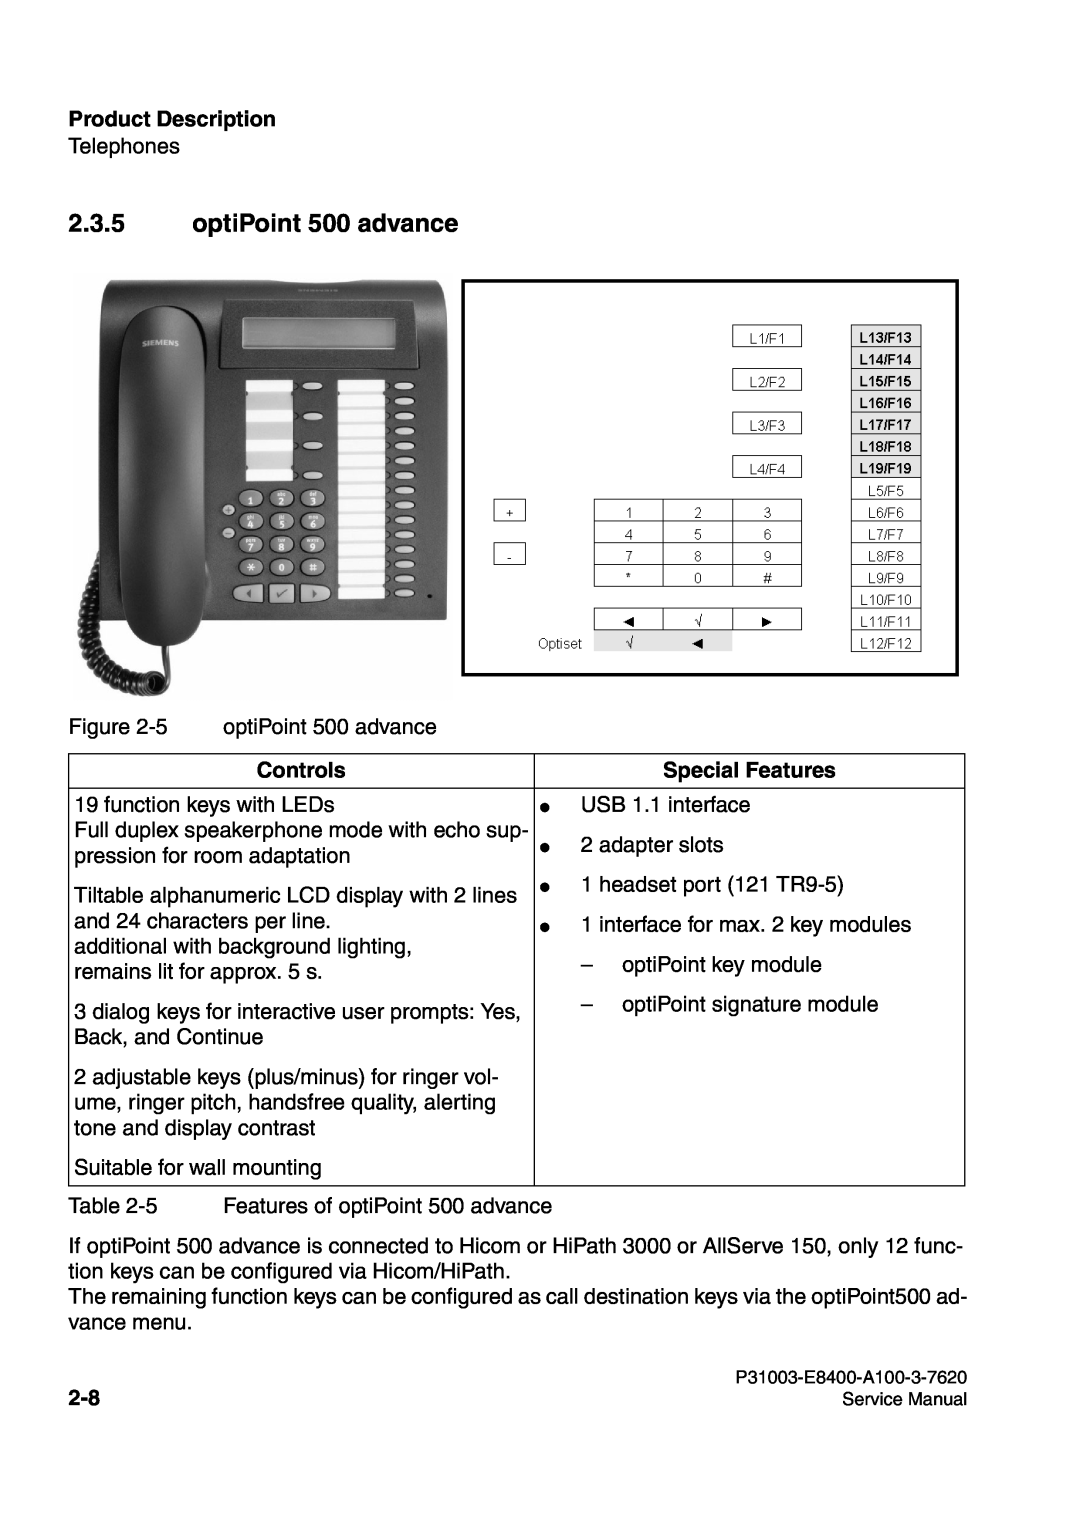 Siemens service manual optiPoint 500 advance, Product Description, Controls, Special Features 